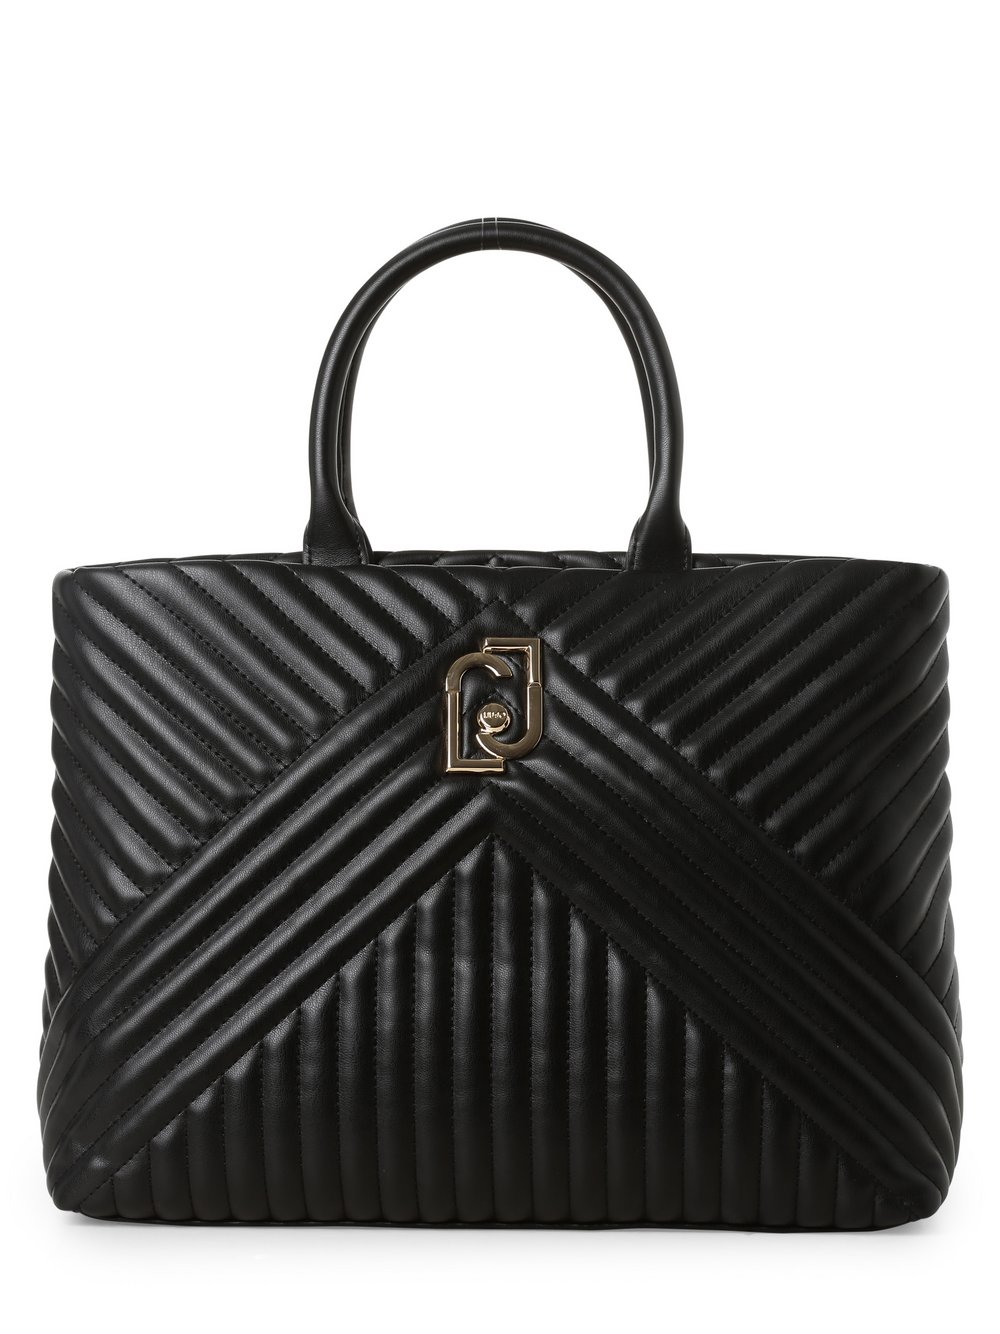 Liu Jo Collection - Damska torba shopper, czarny